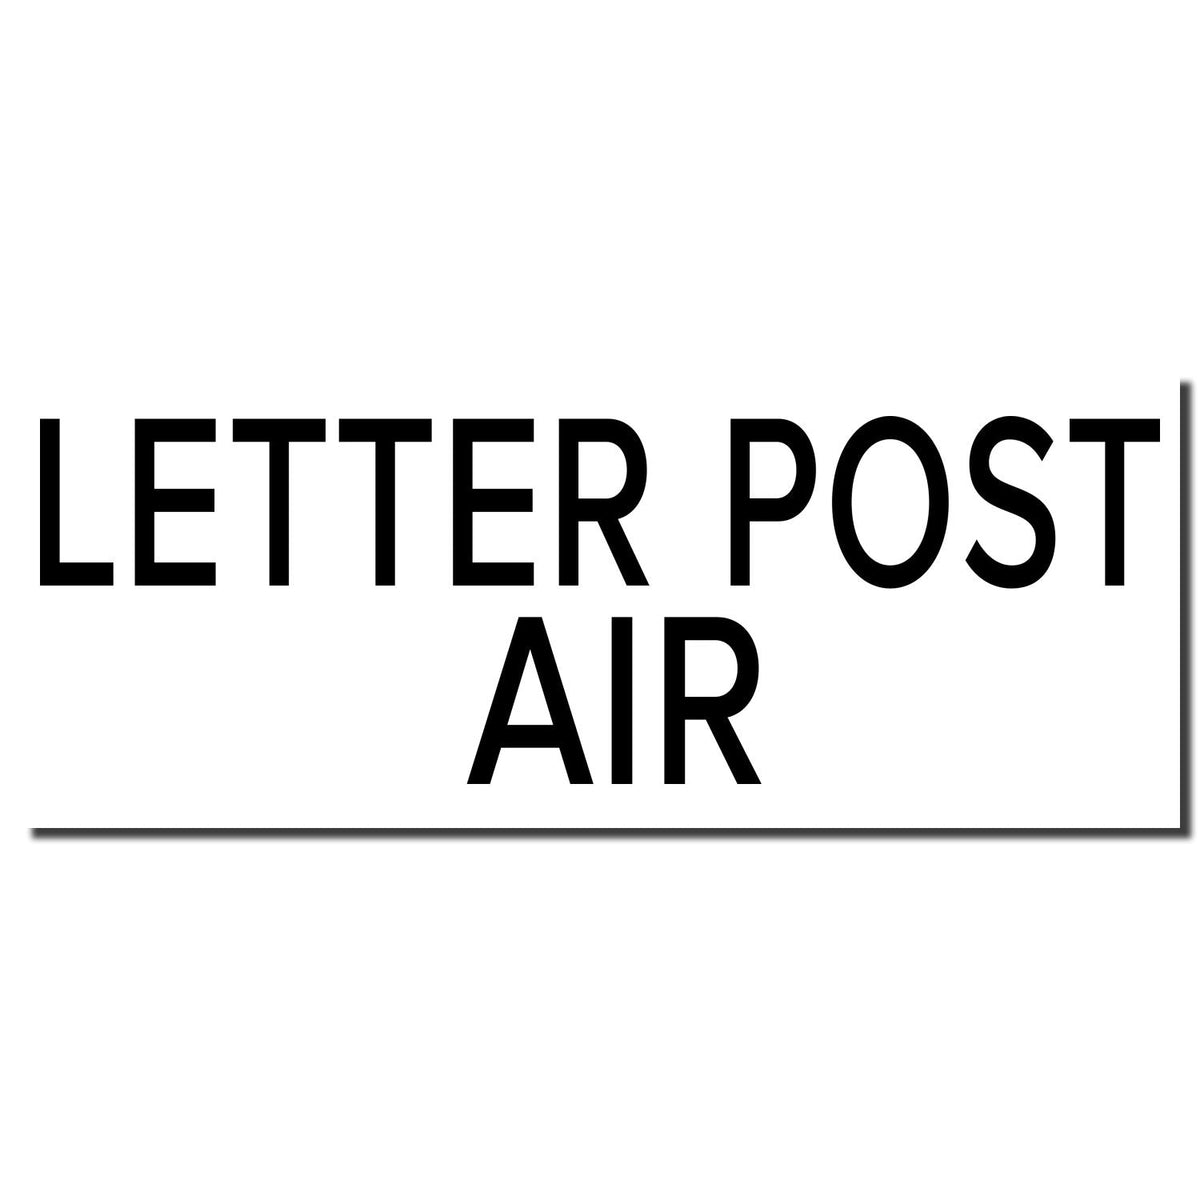 Enlarged Imprint Self-Inking Letter Post Air Stamp Sample